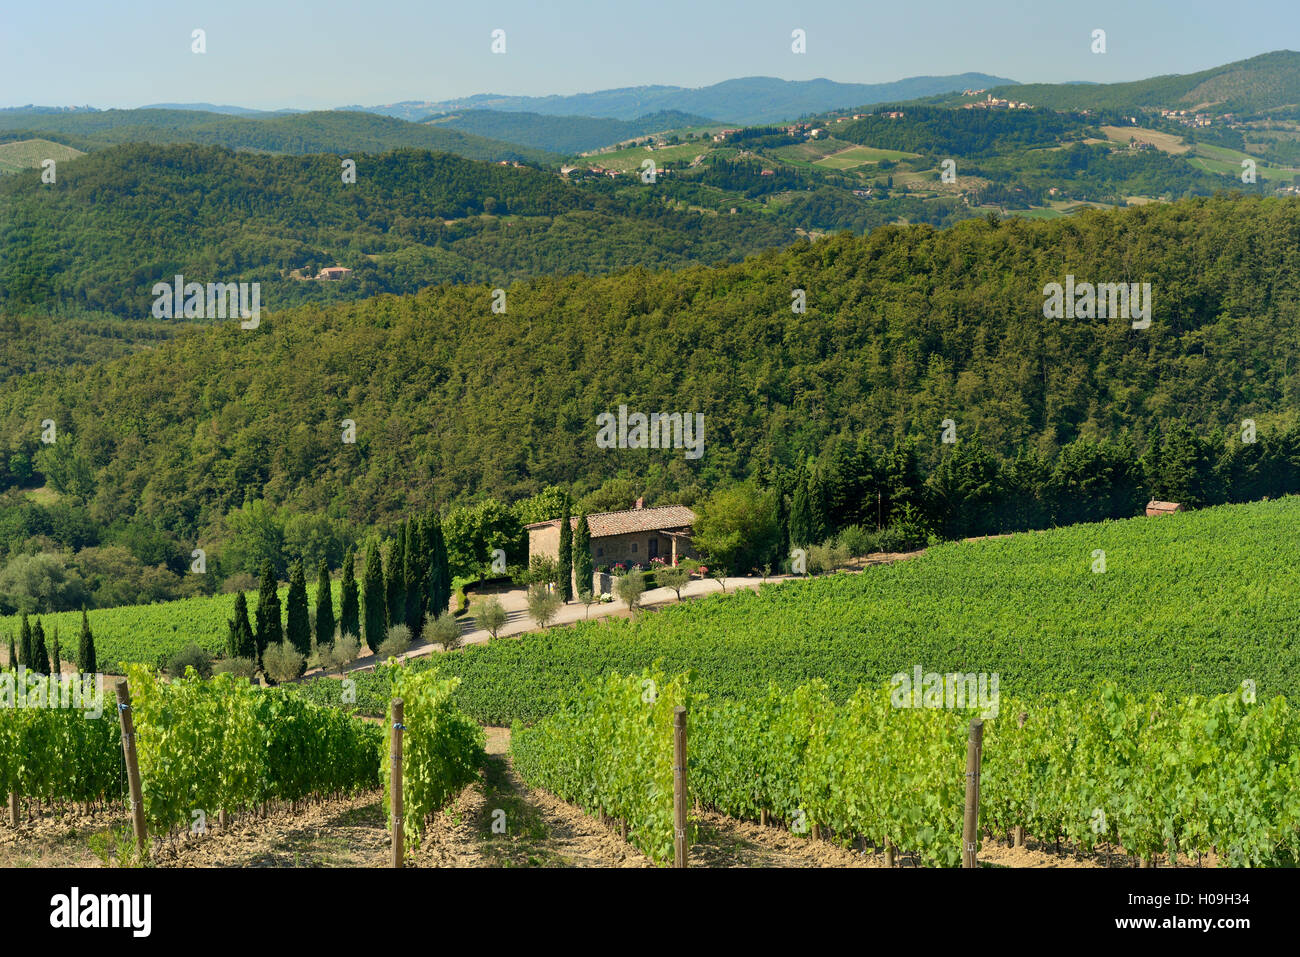 Vineyard and olive grove, Pian D'Albola, Radda in Chianti, Siena Province, Tuscany, Italy, Europe Stock Photo